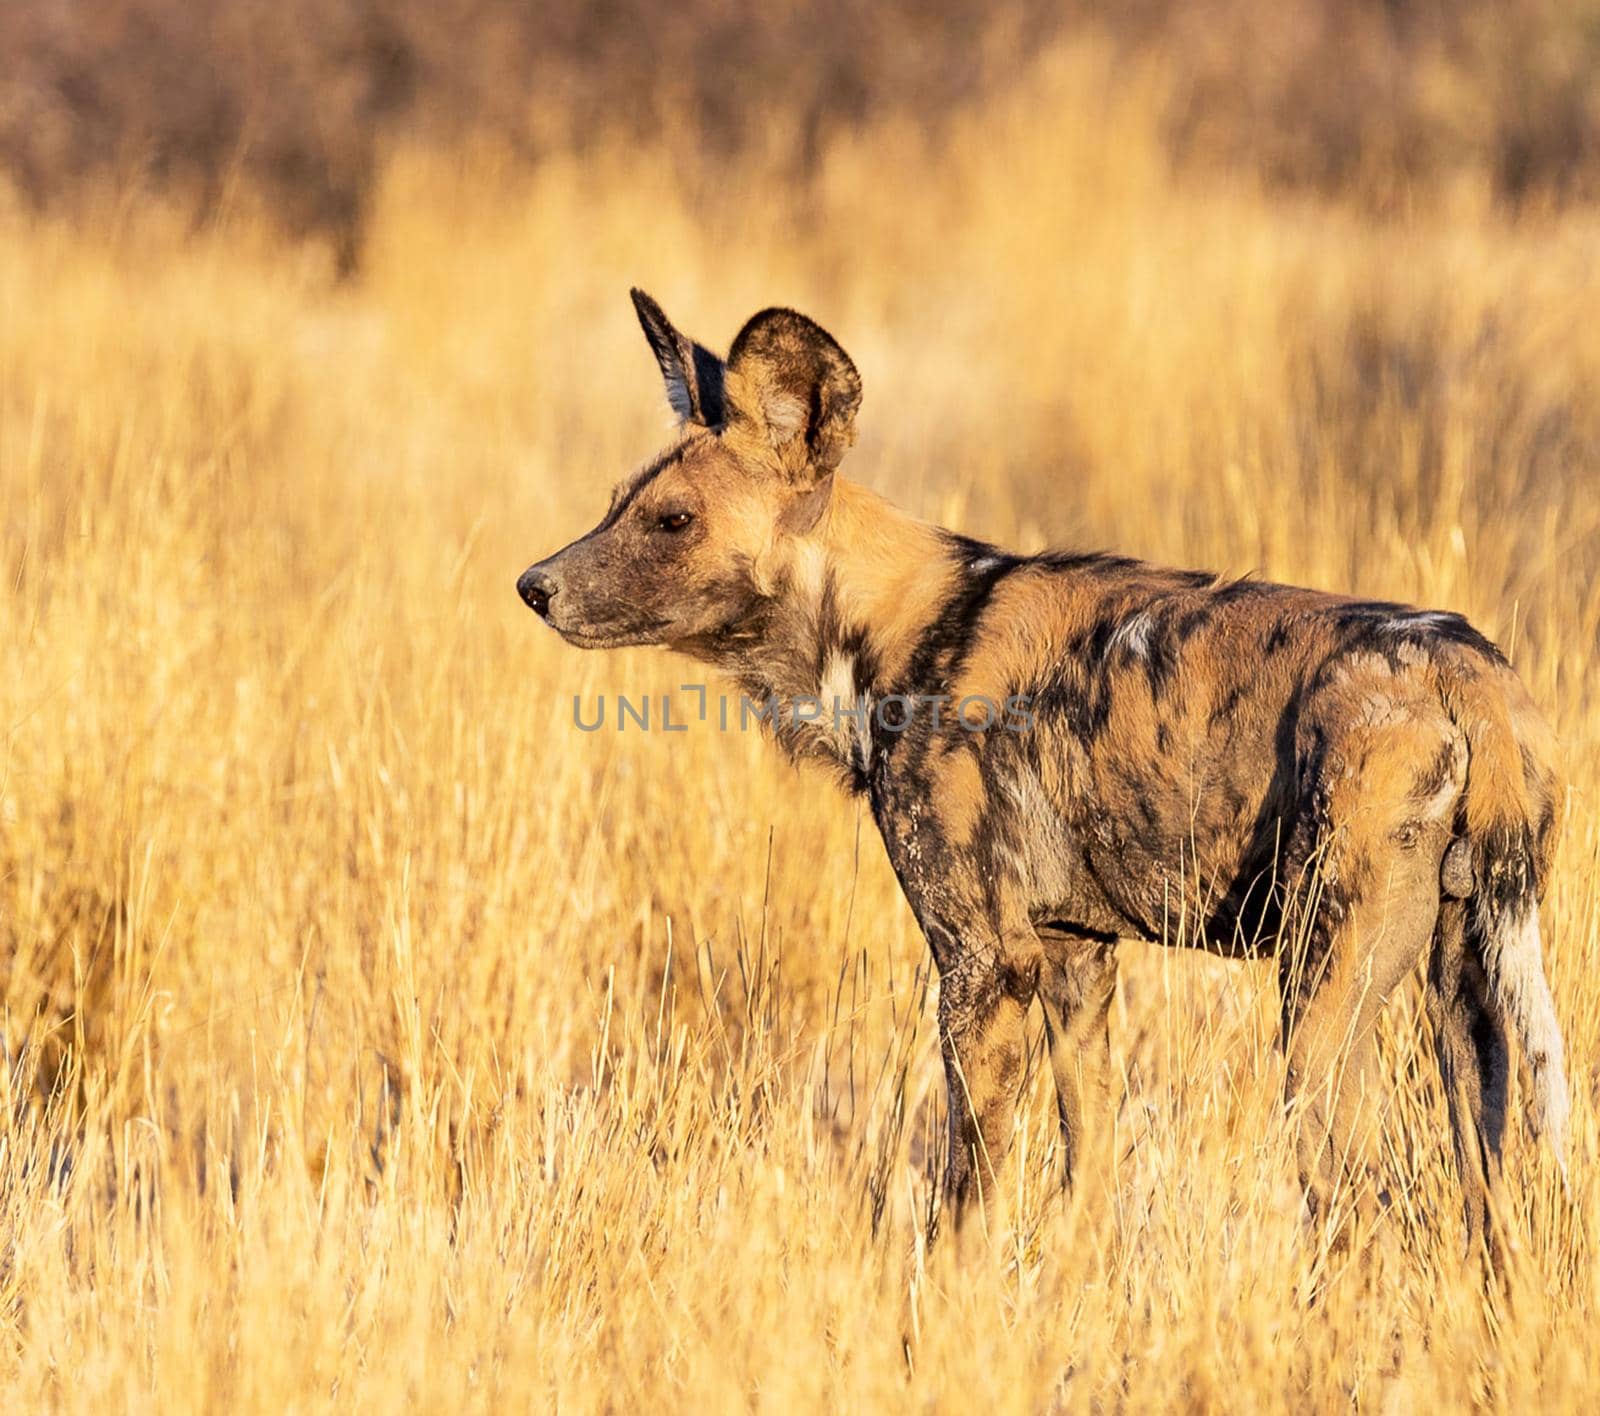 Magical  places in Kalahari wildlife  Pictures